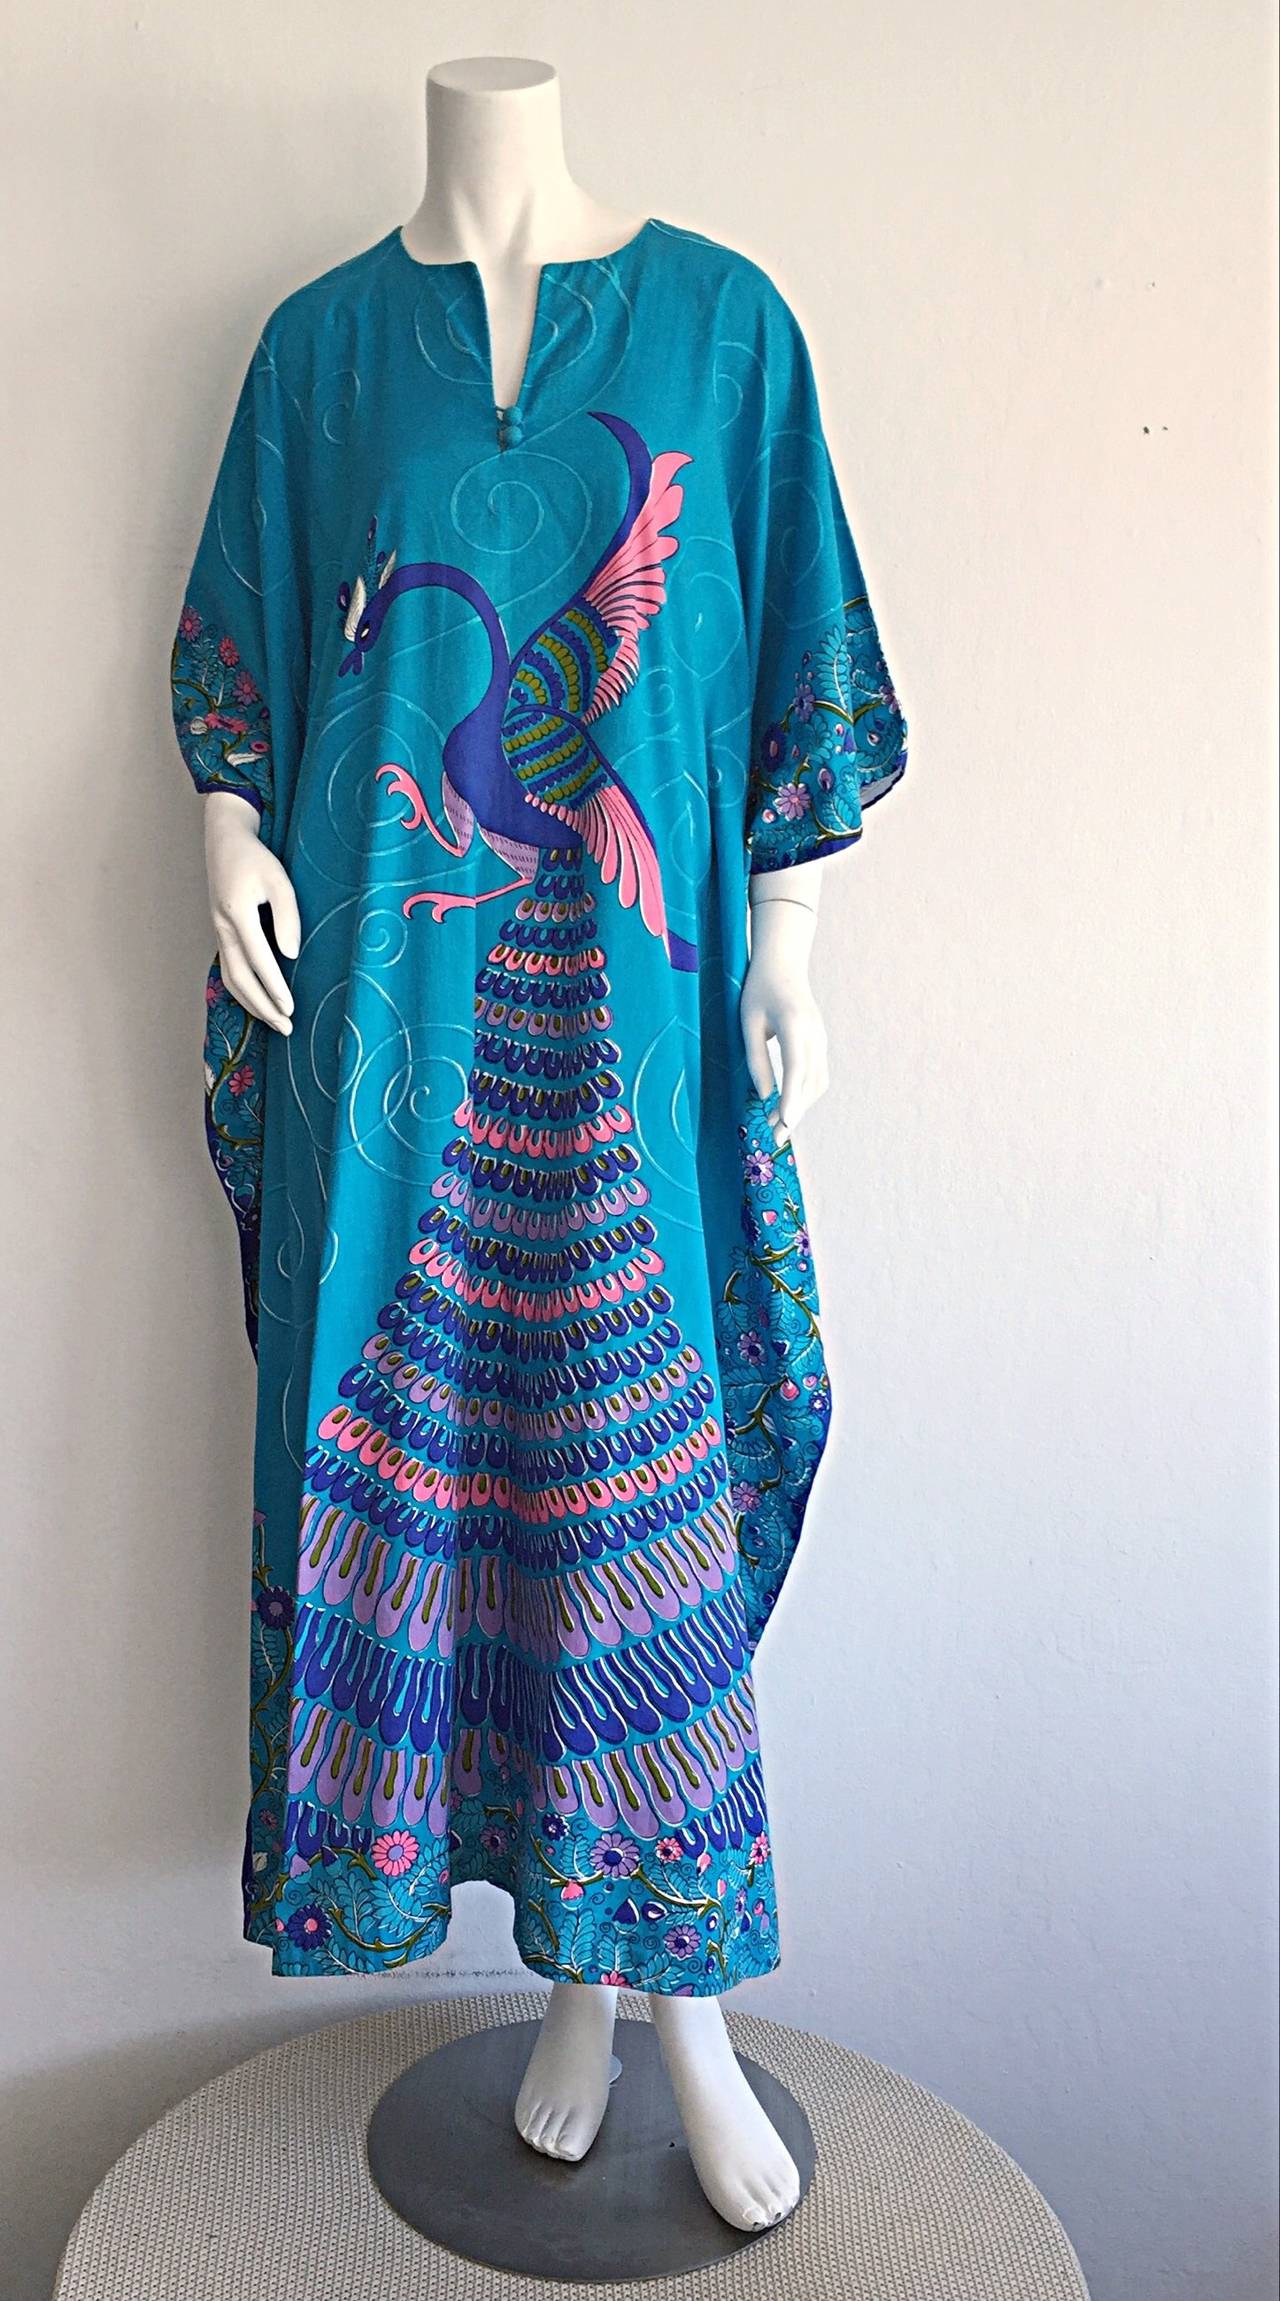 Women's Amazing Vintage Neiman Marcus Peacock Asian Themed Colorful Cotton Caftan